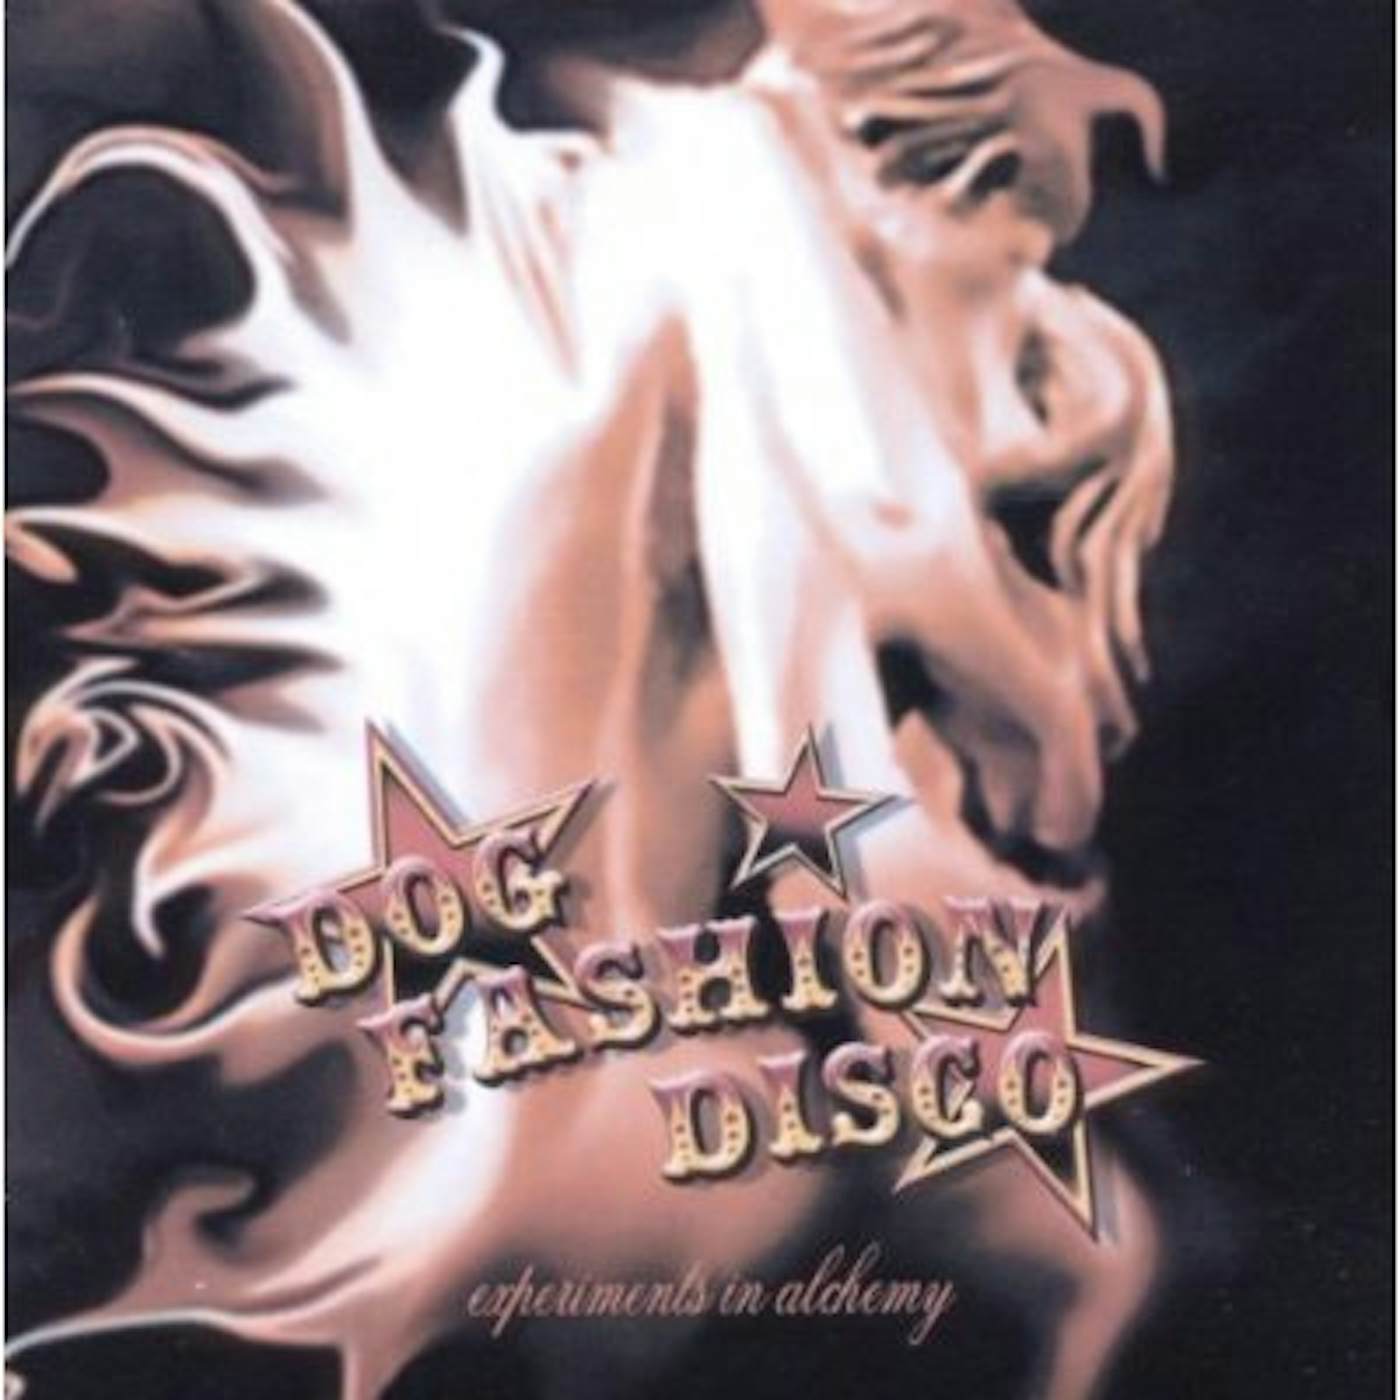 Dog Fashion Disco EXPERIMENTS IN ALCHEMY CD